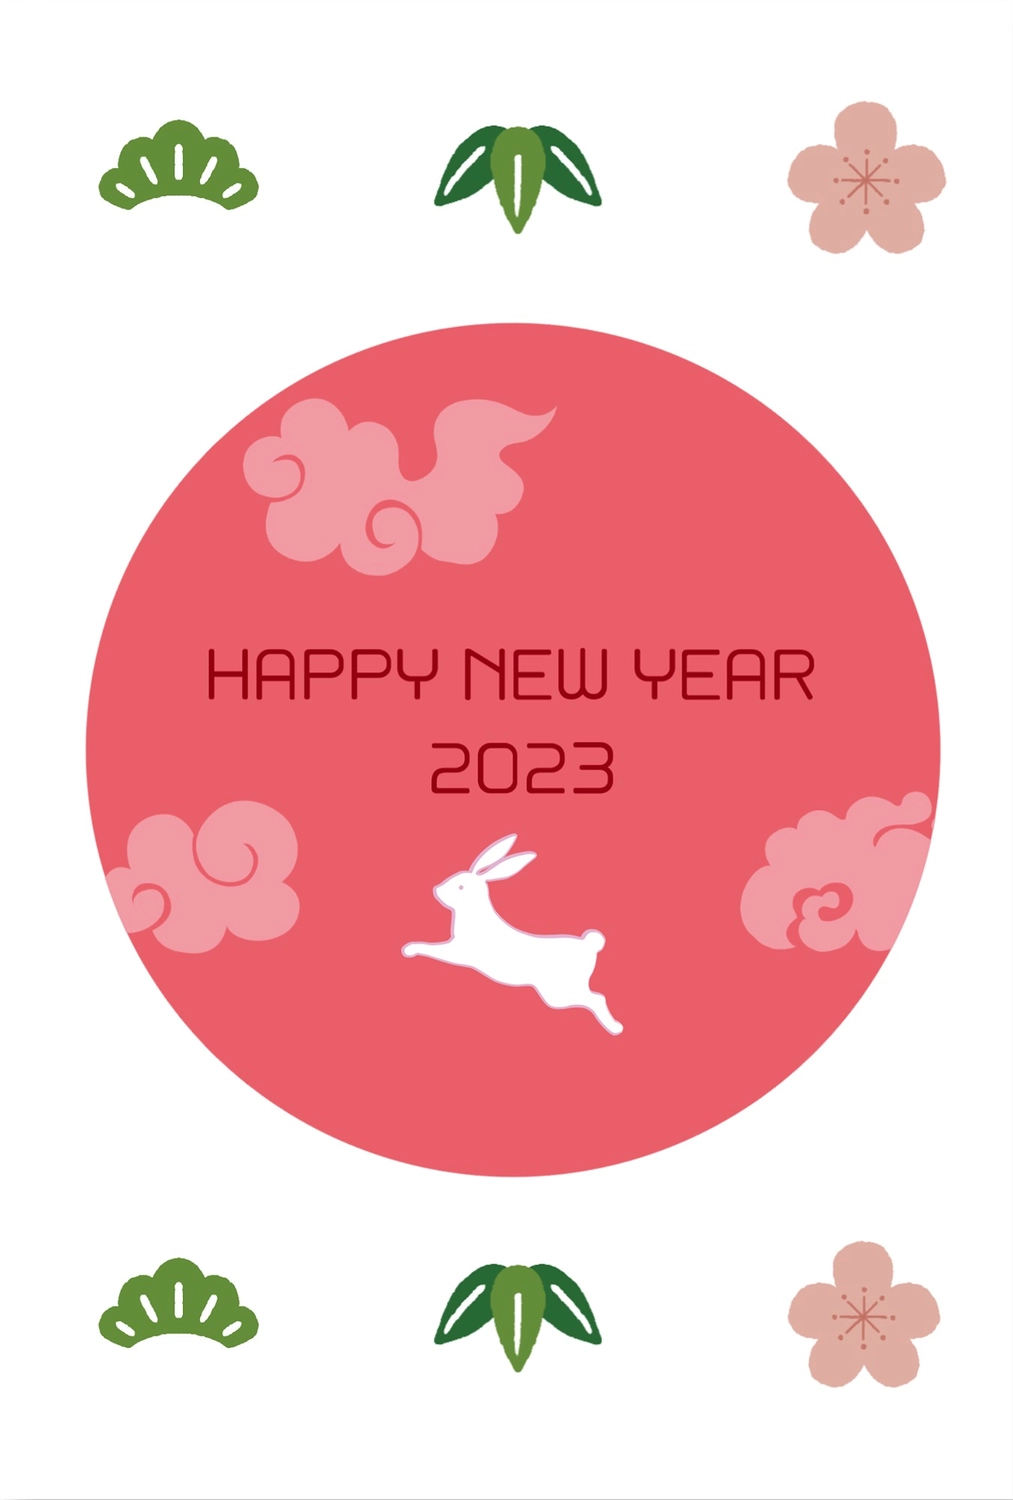 松竹梅とうさぎ年賀状, ラビット, Thiệp chúc mừng năm mới, NĂM MỚI, Thiệp năm mới mẫu